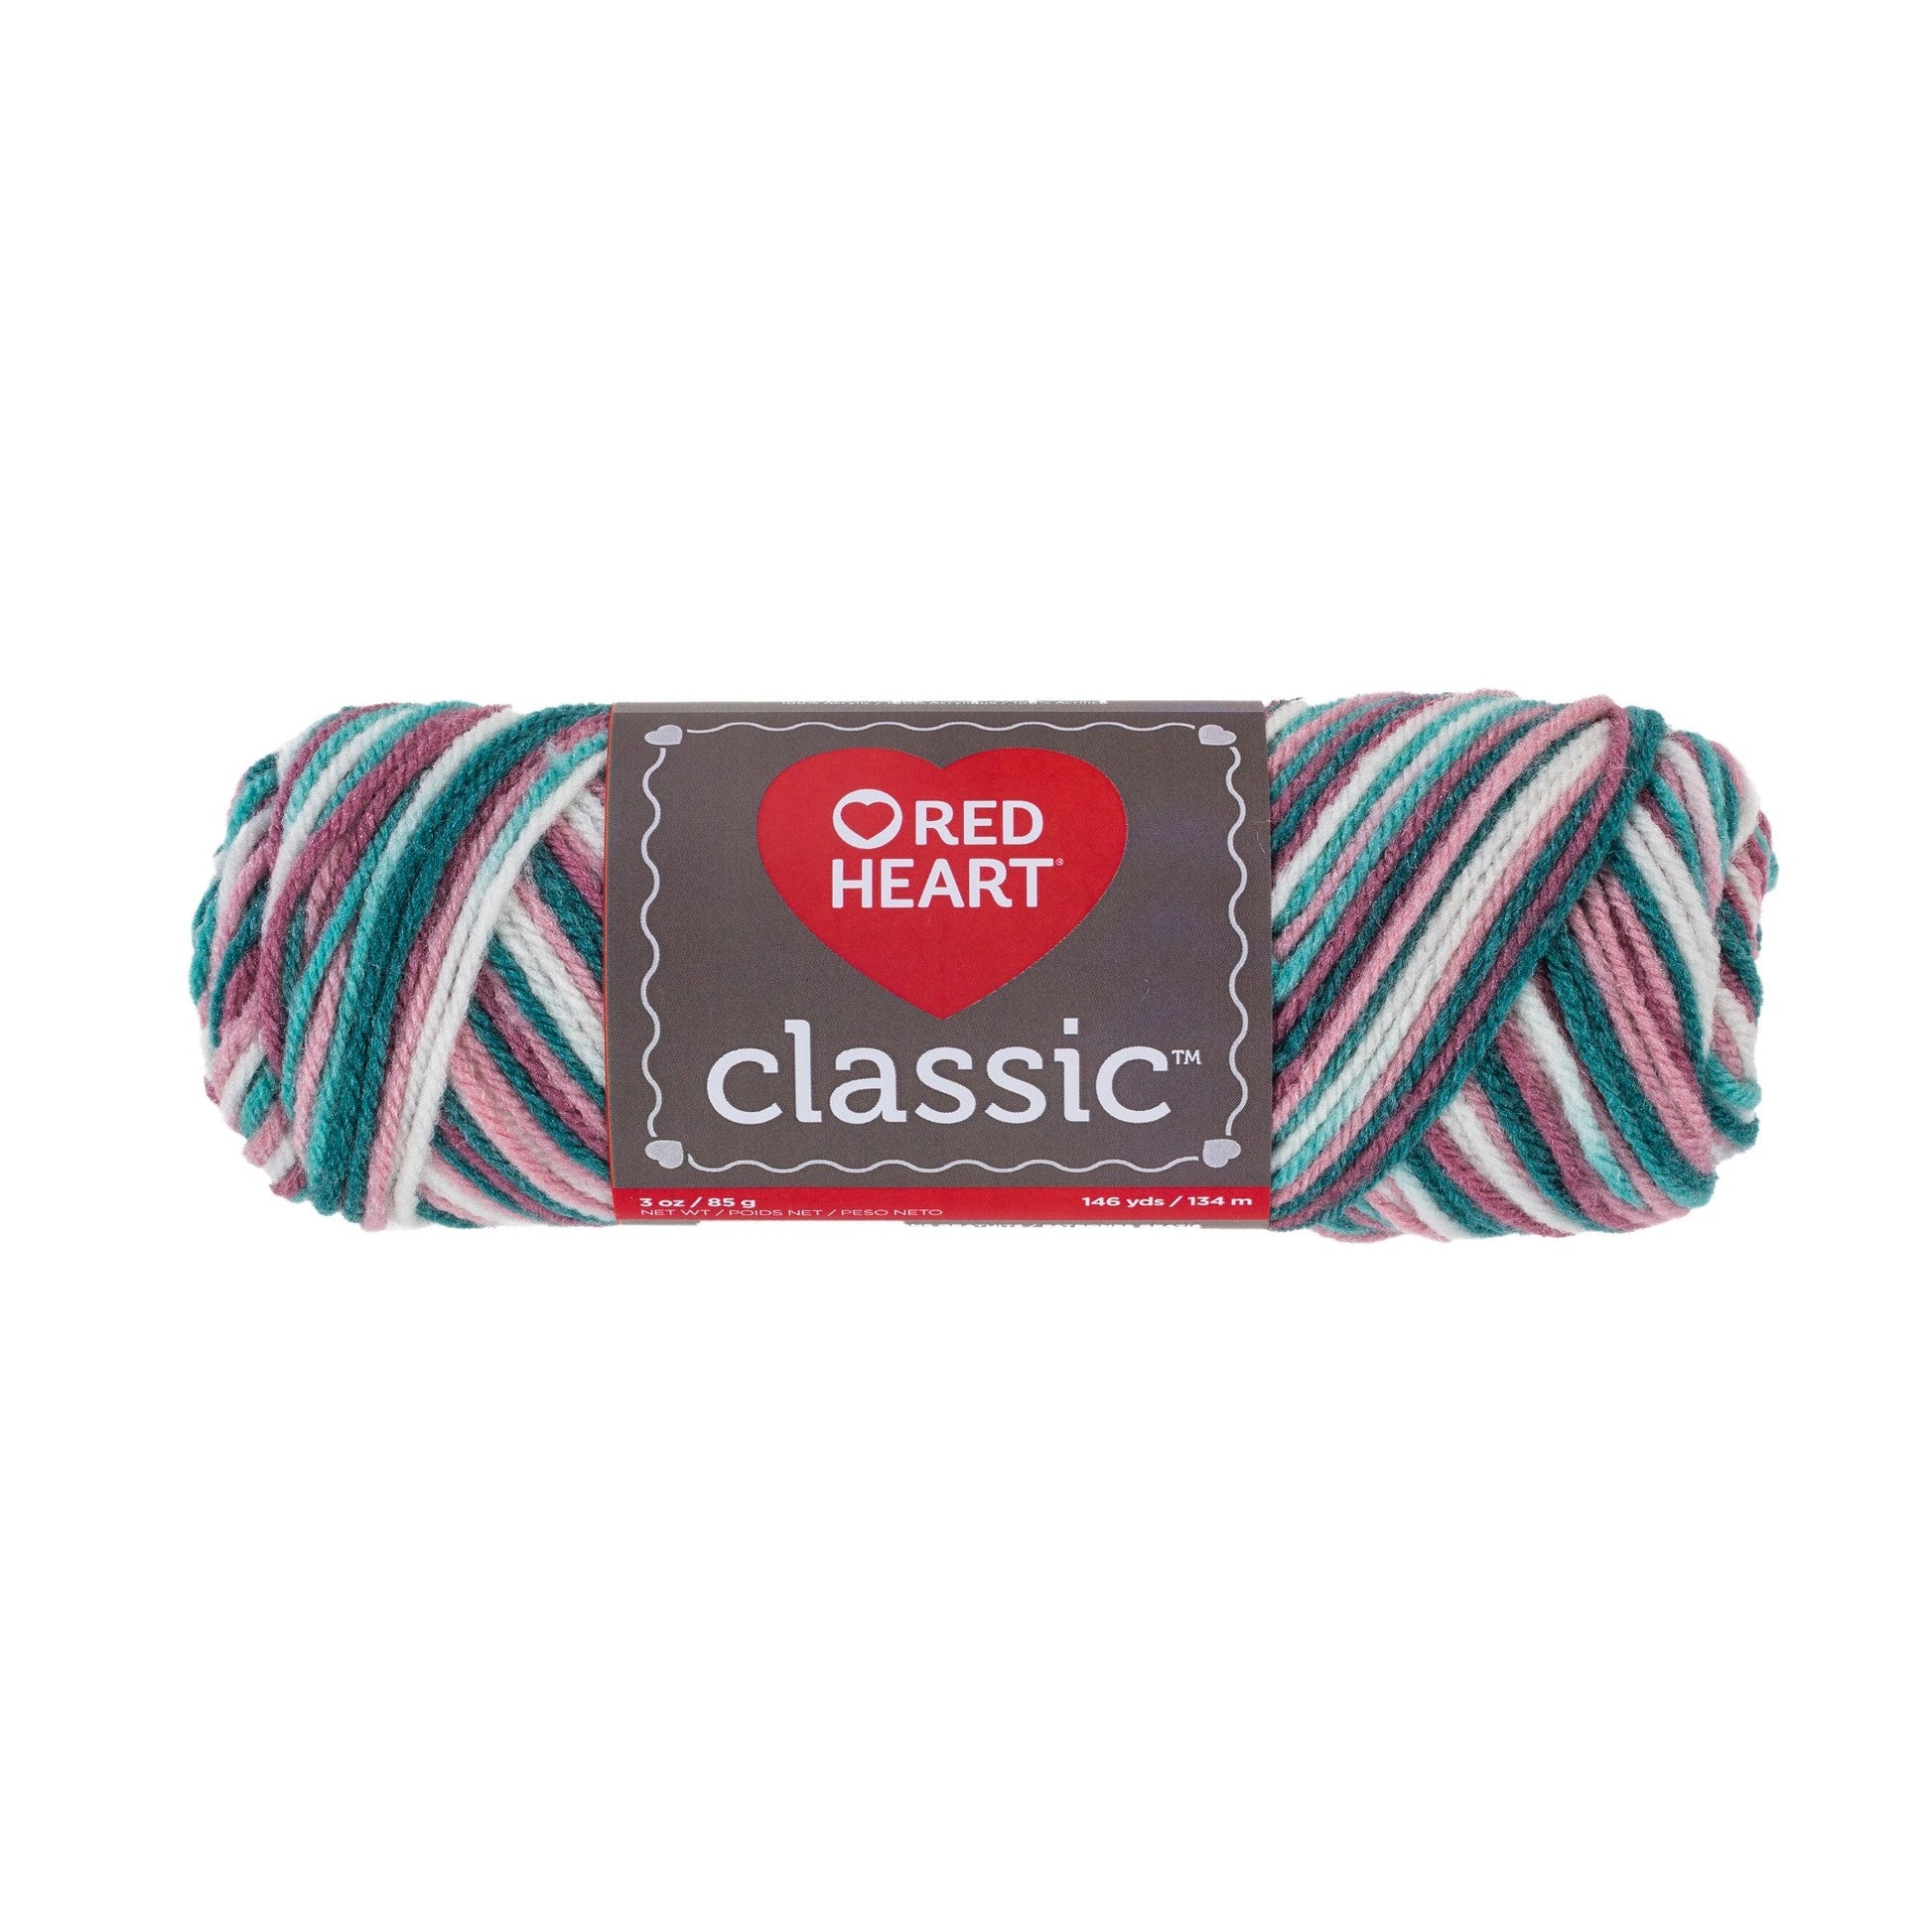 Red Heart Classic Yarn - Clearance shades Rambling Rose